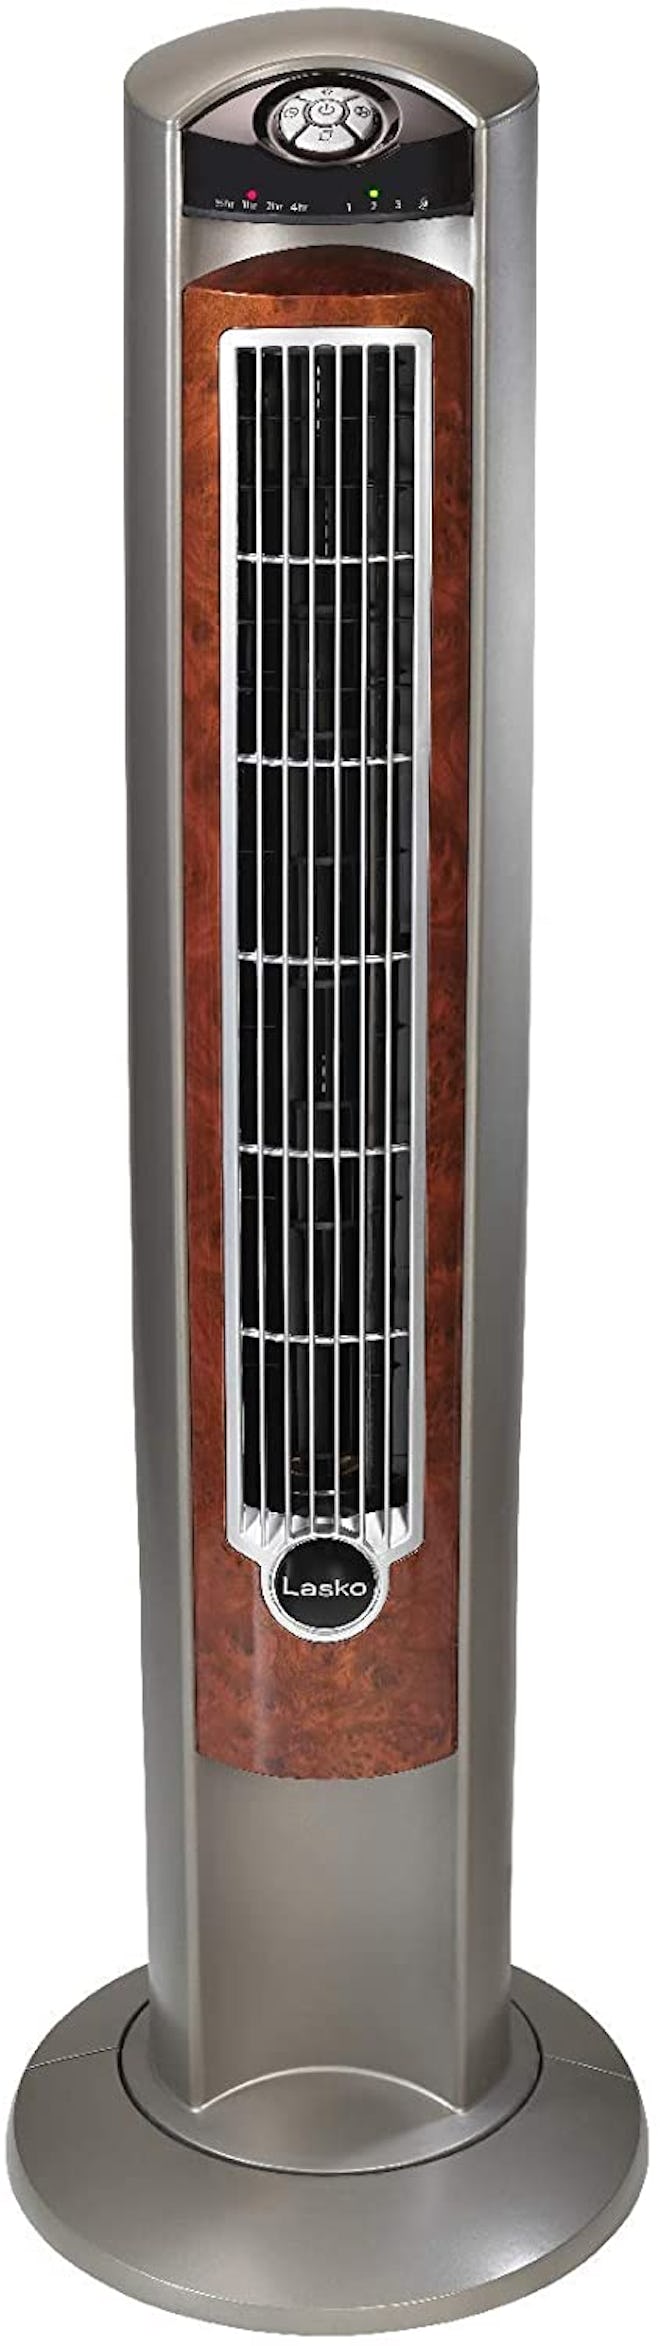 Lasko Portable Electric 42.5" Oscillating Tower Fan